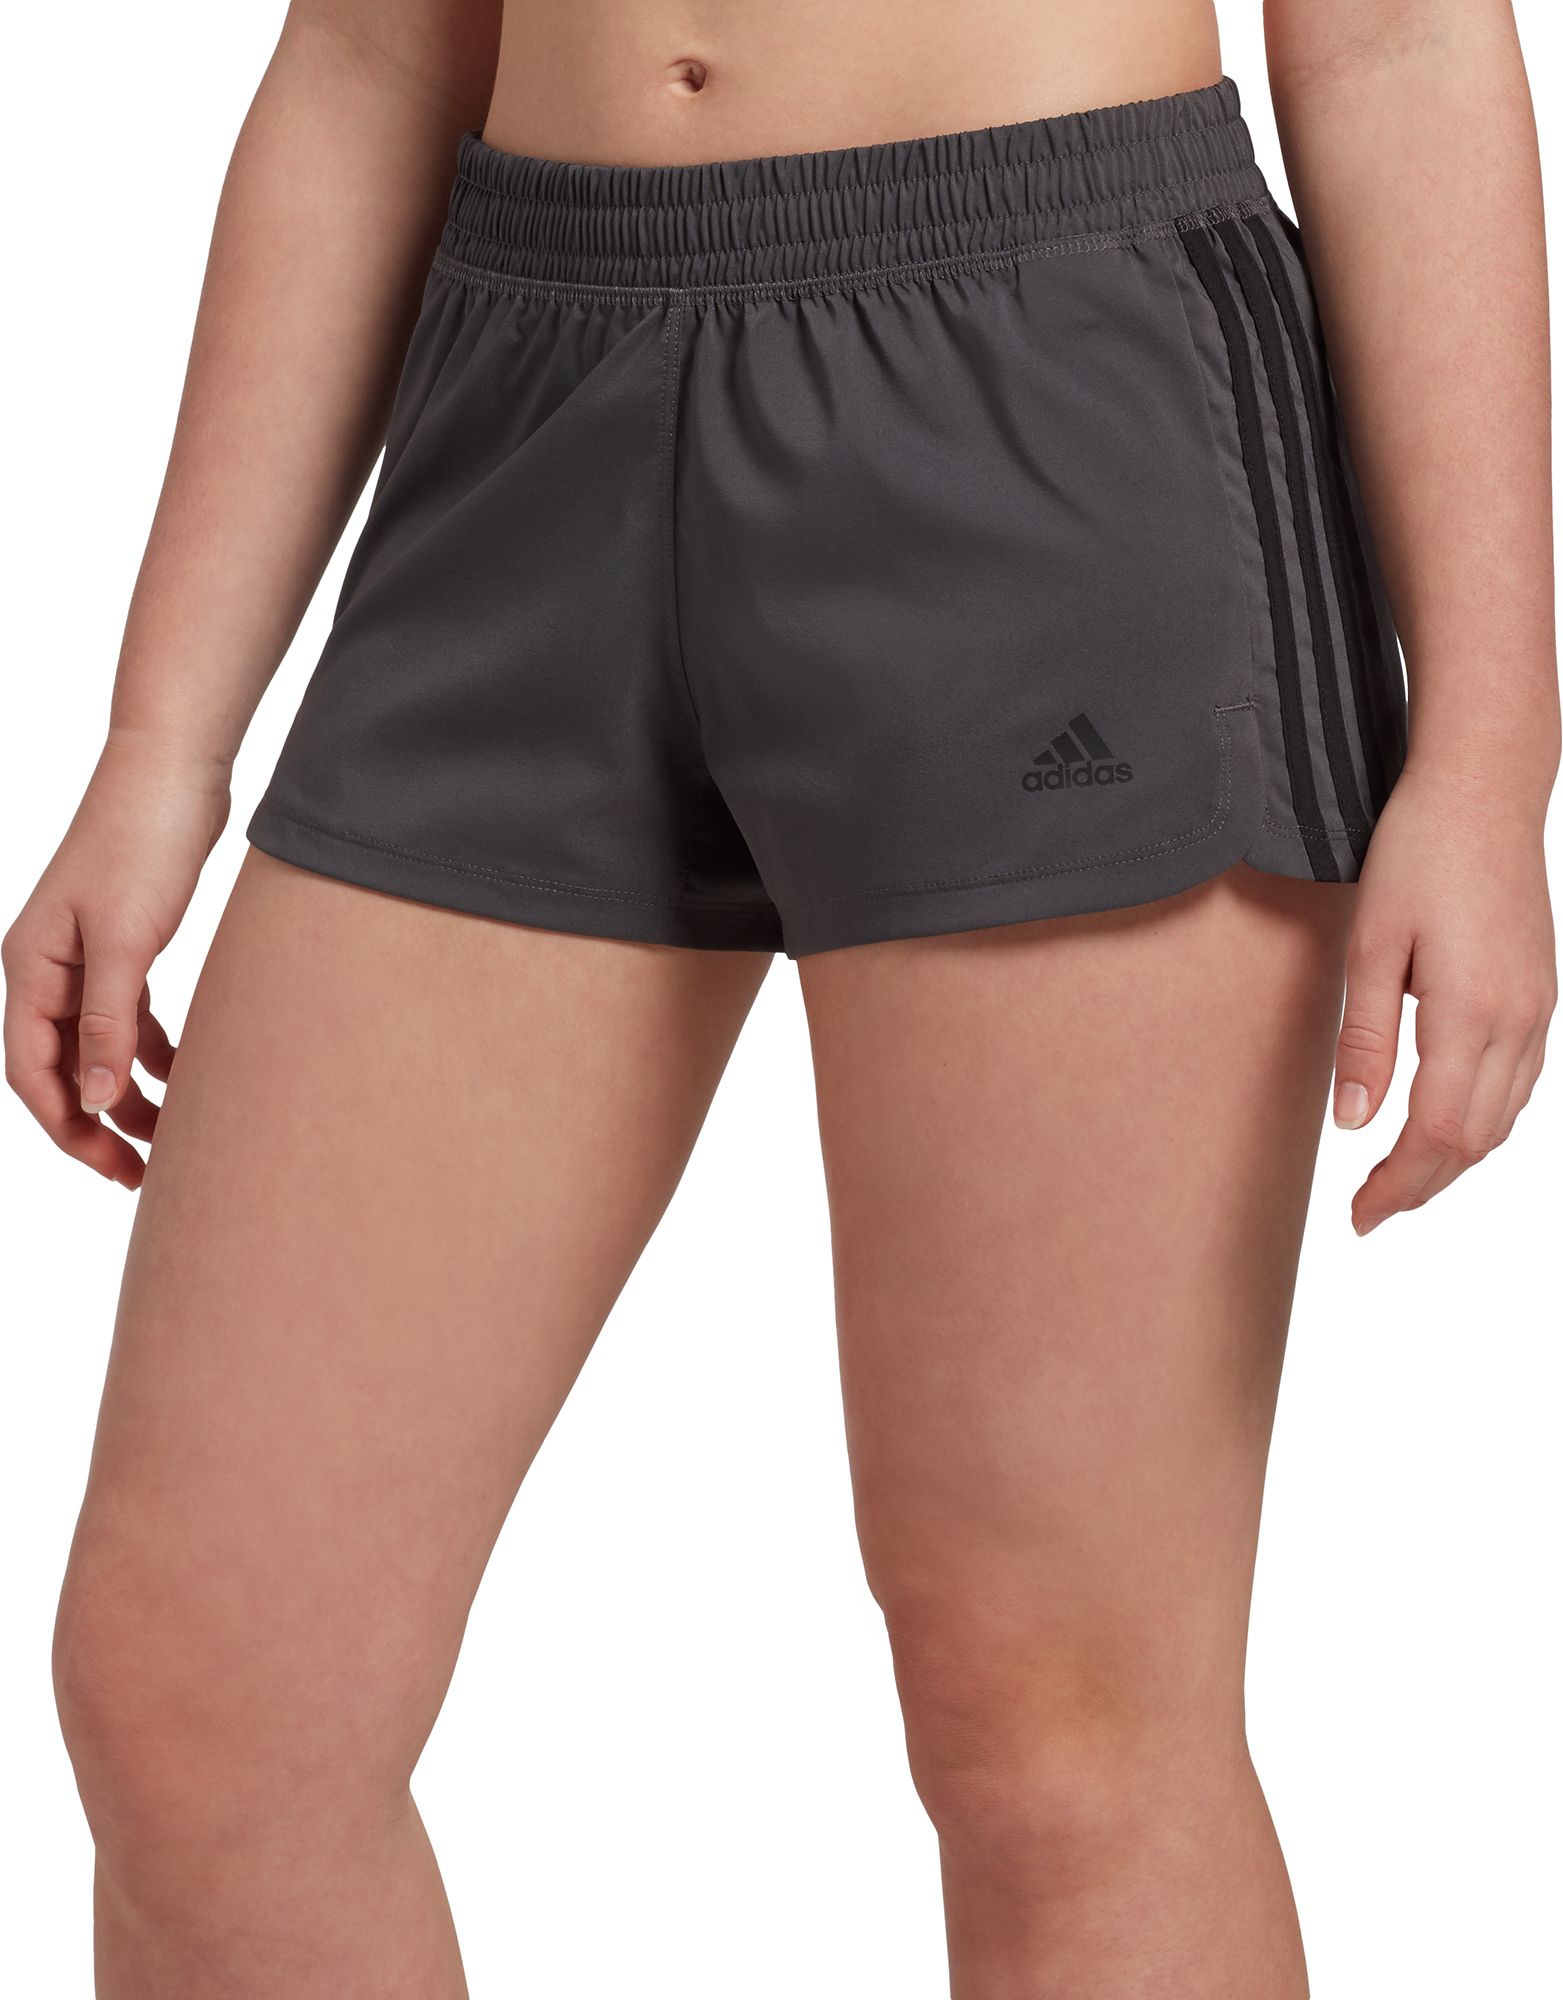 climalite adidas shorts womens